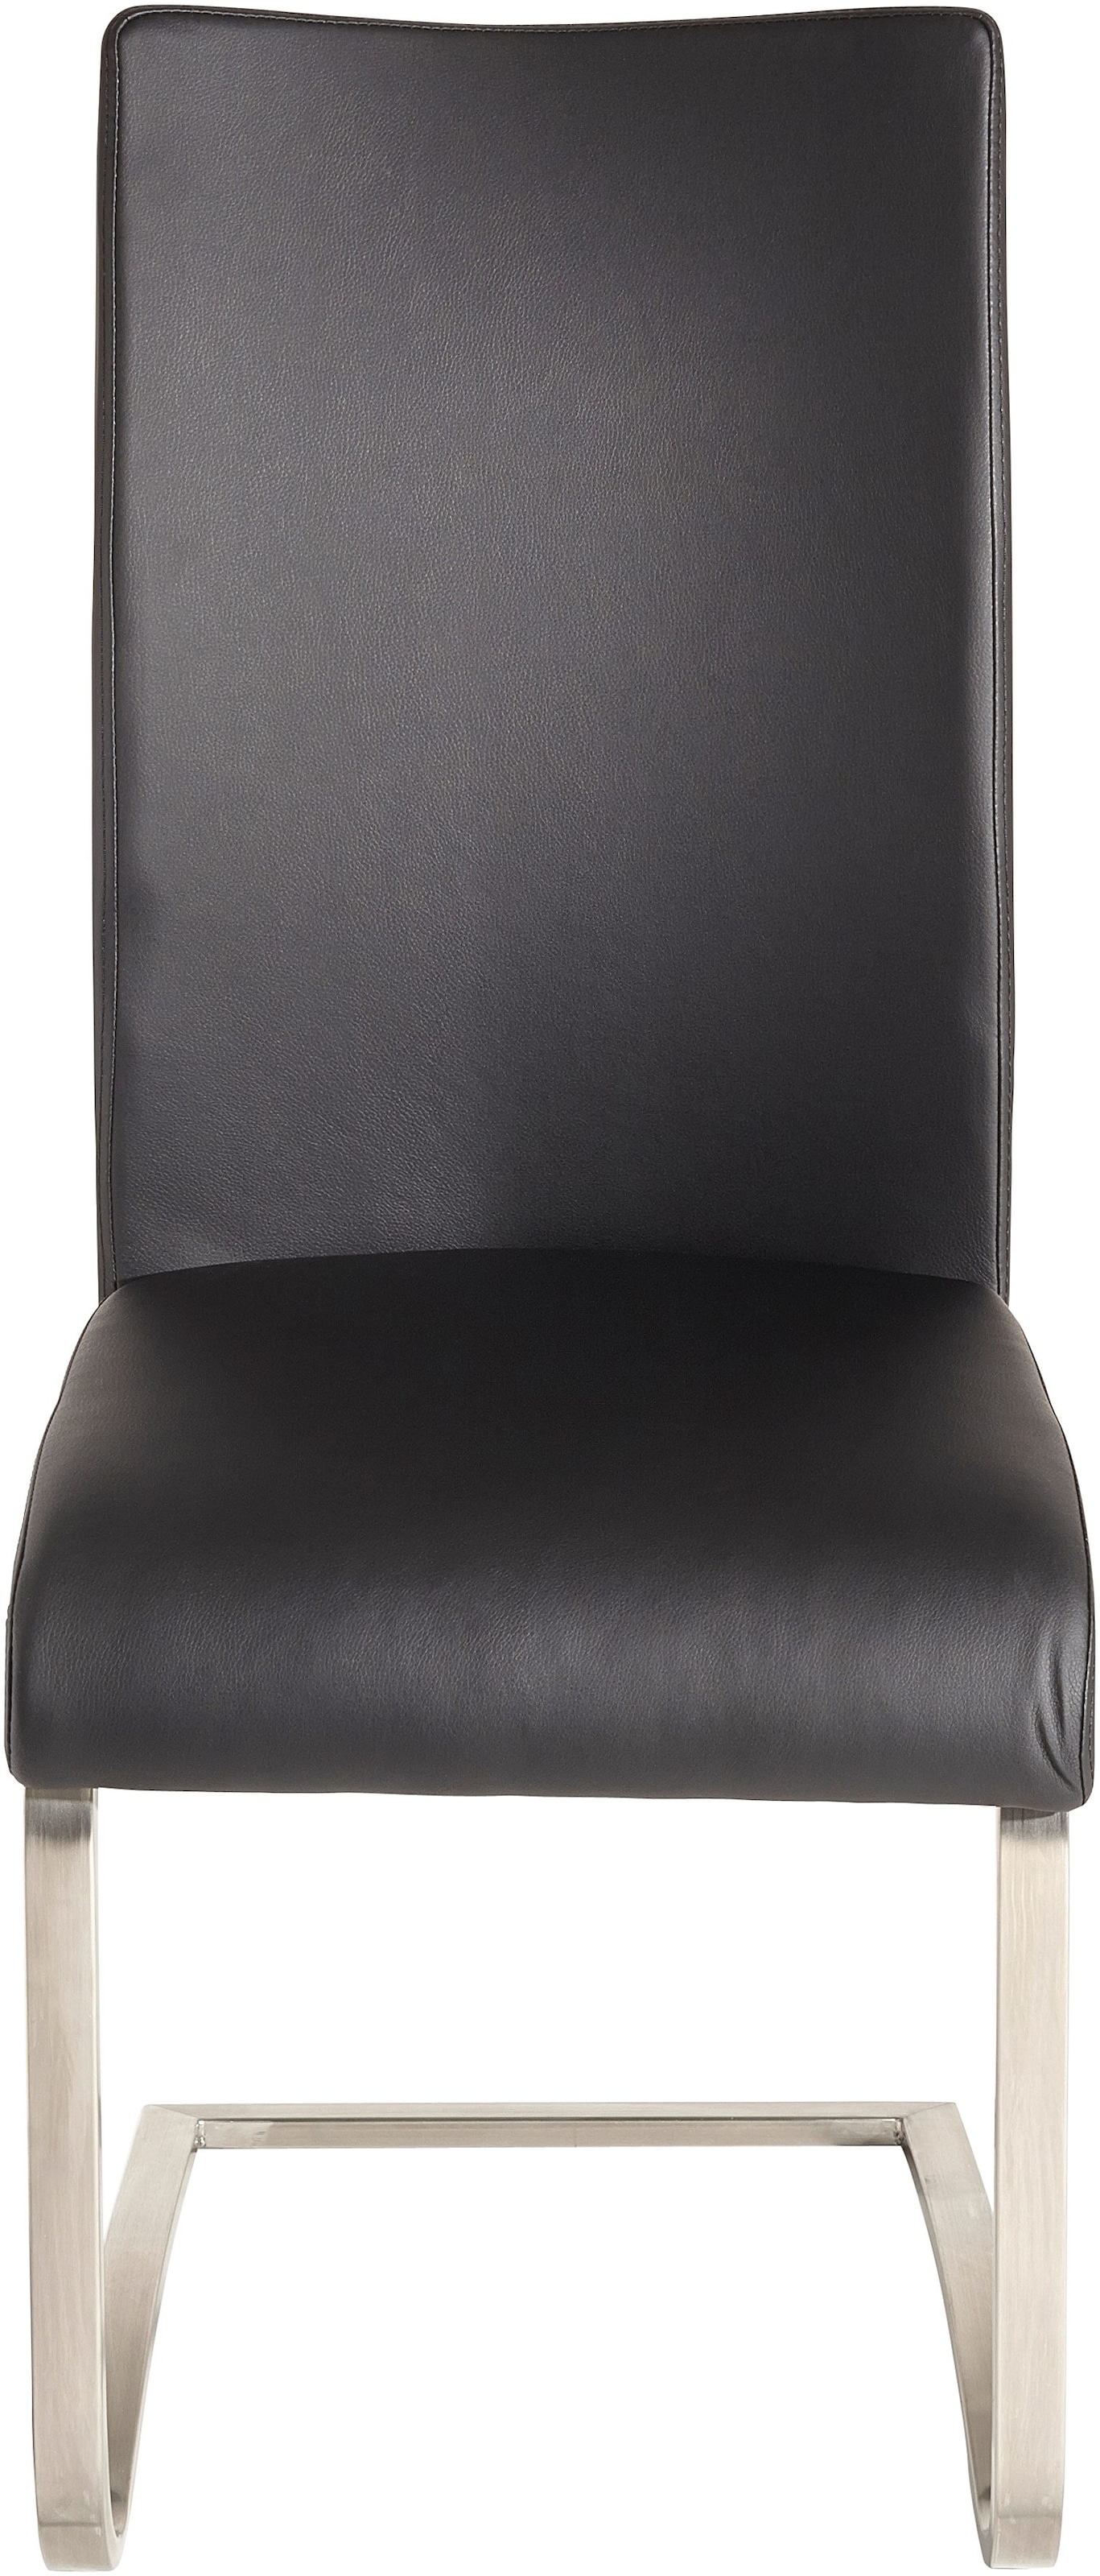 MCA furniture Freischwinger »Arco«, (Set), 2 St., Leder, Stuhl mit Echtlederbezug, belastbar bis 130 Kg